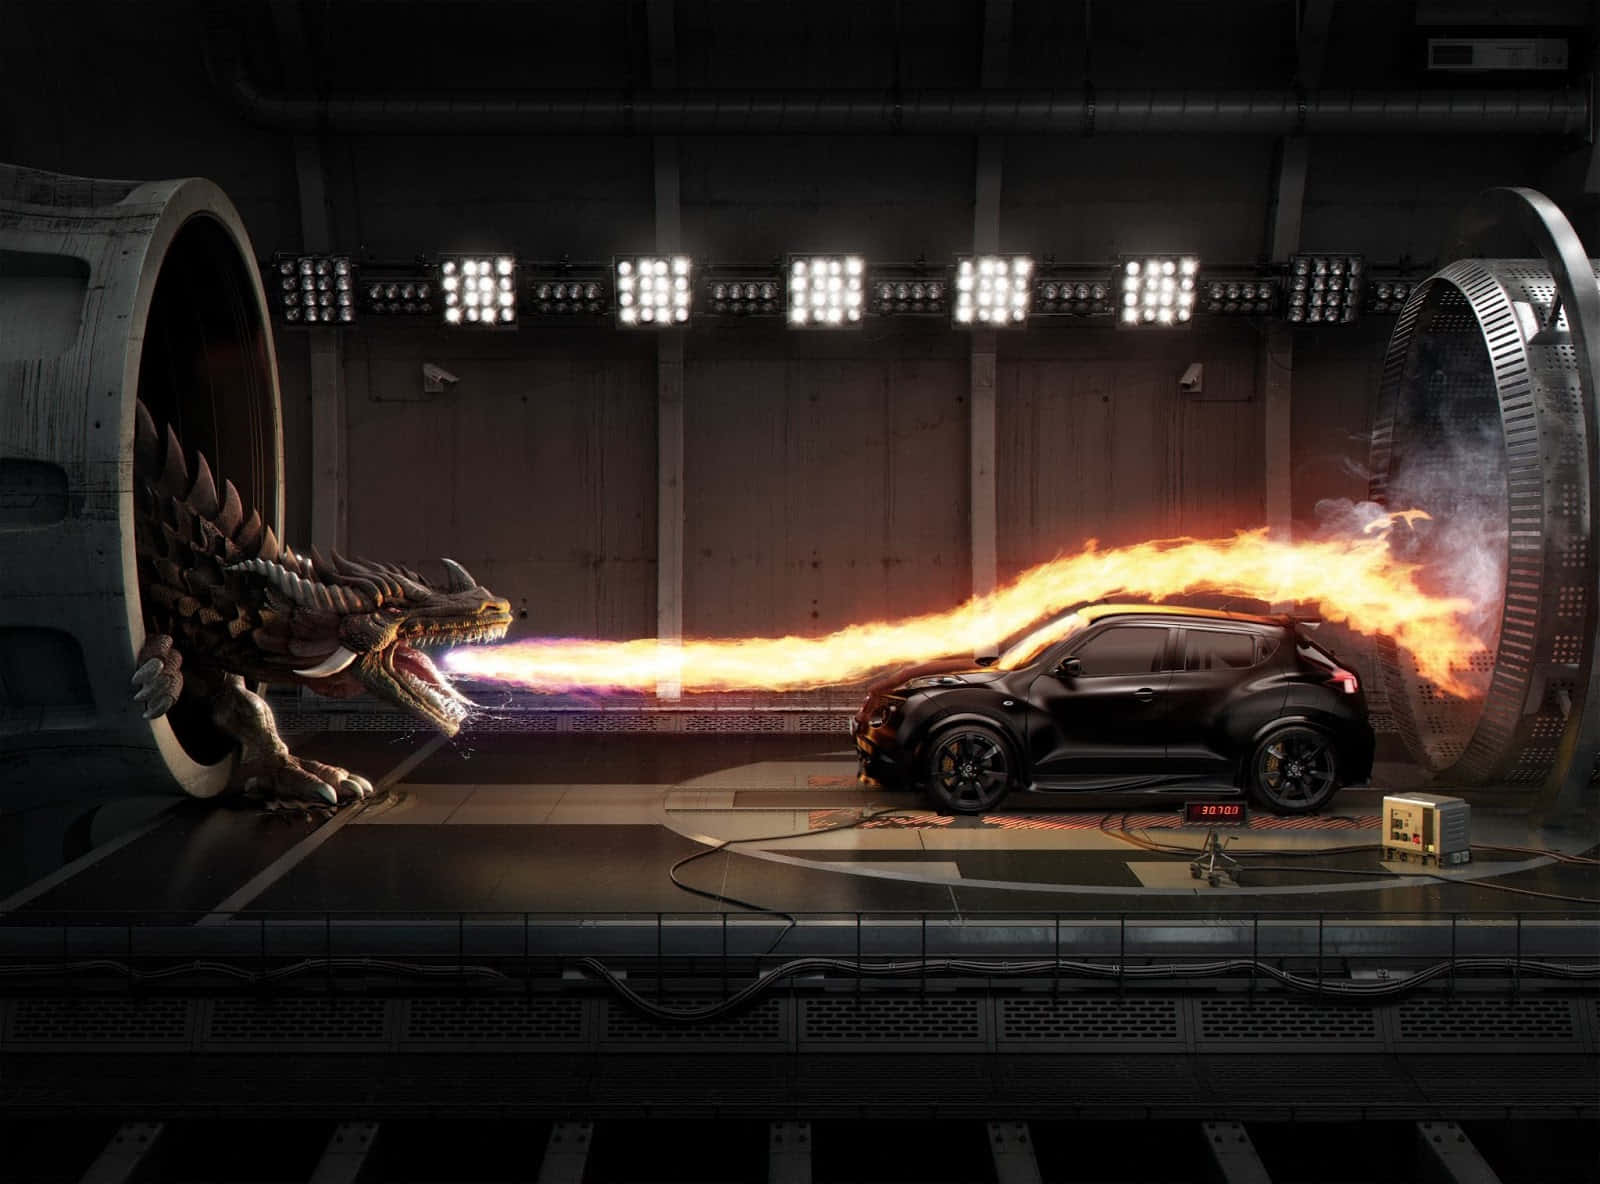 Awe-inspiring Peugeot Onyx Supersport In Action Wallpaper